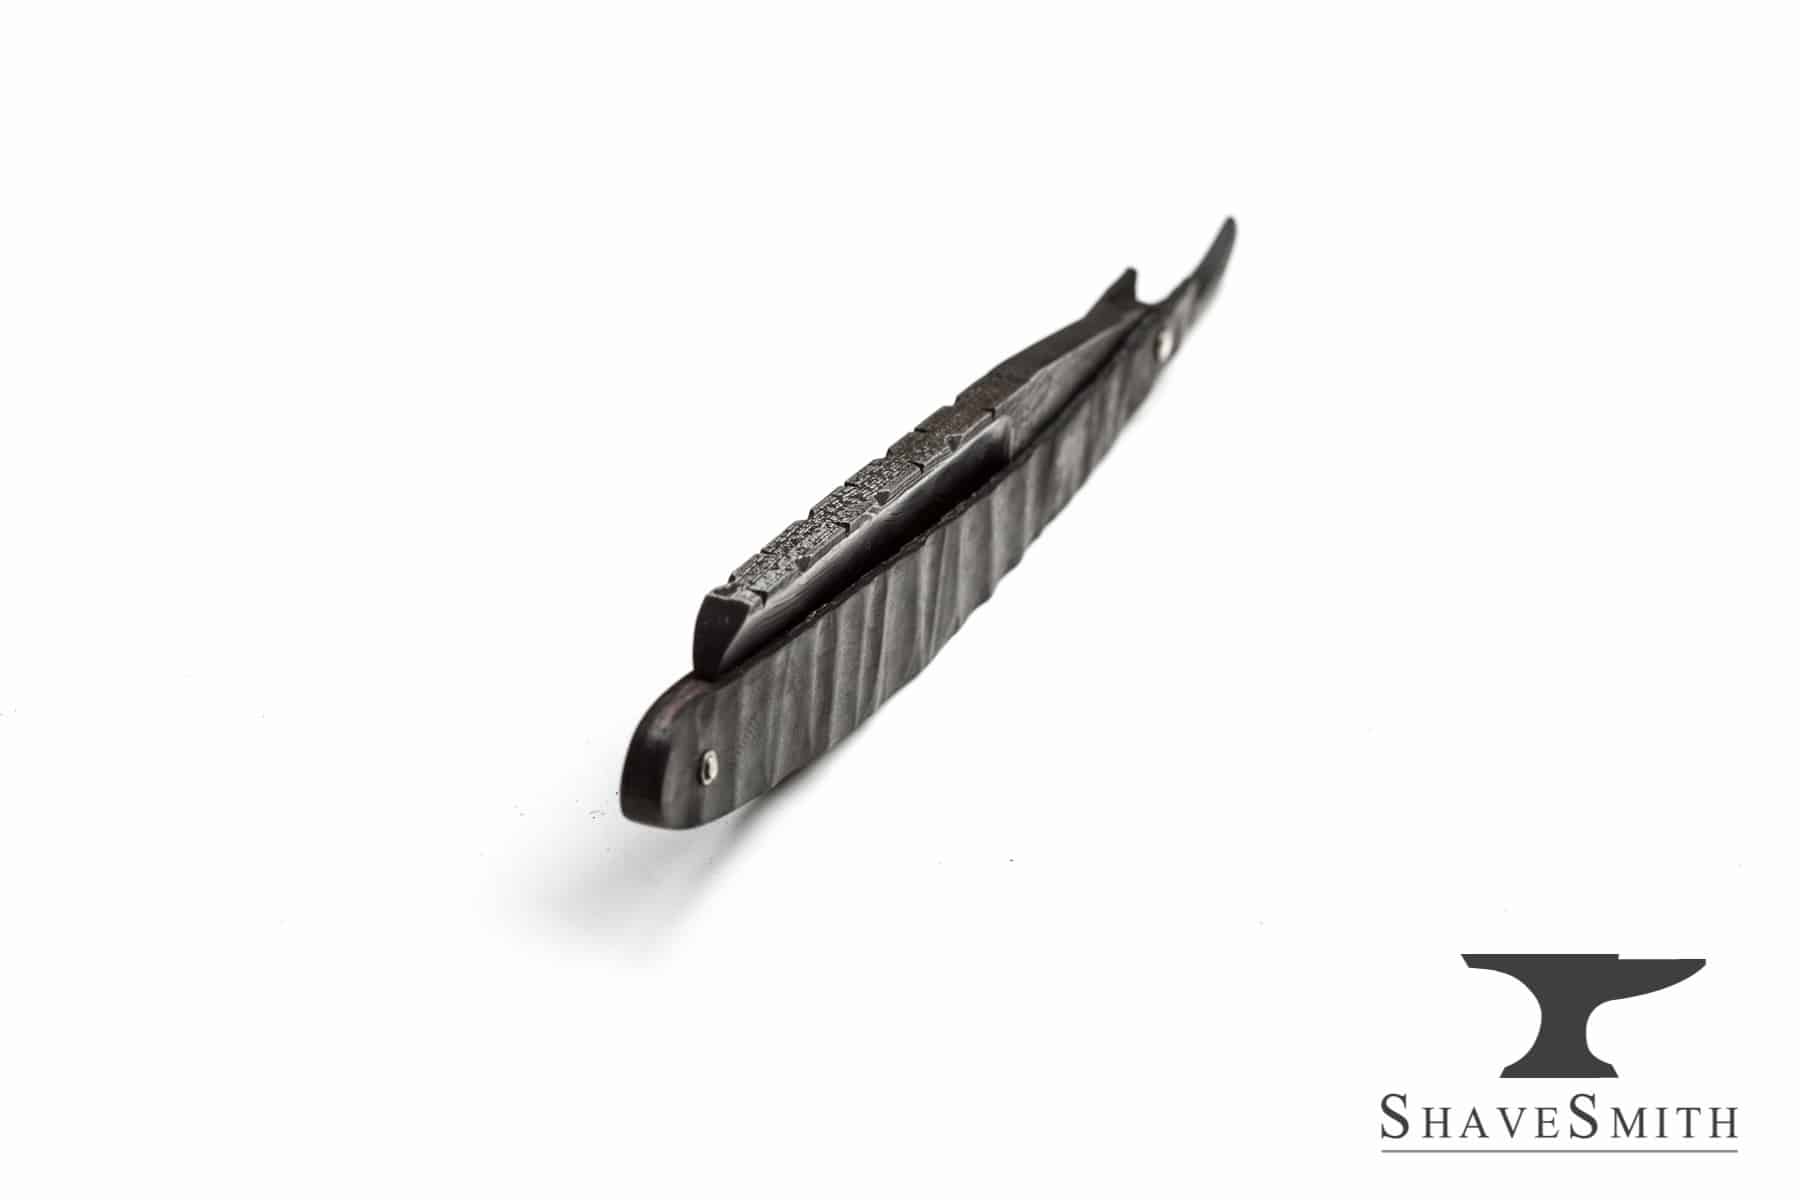 A hollow ground custom straight razor made by ShaveSmith